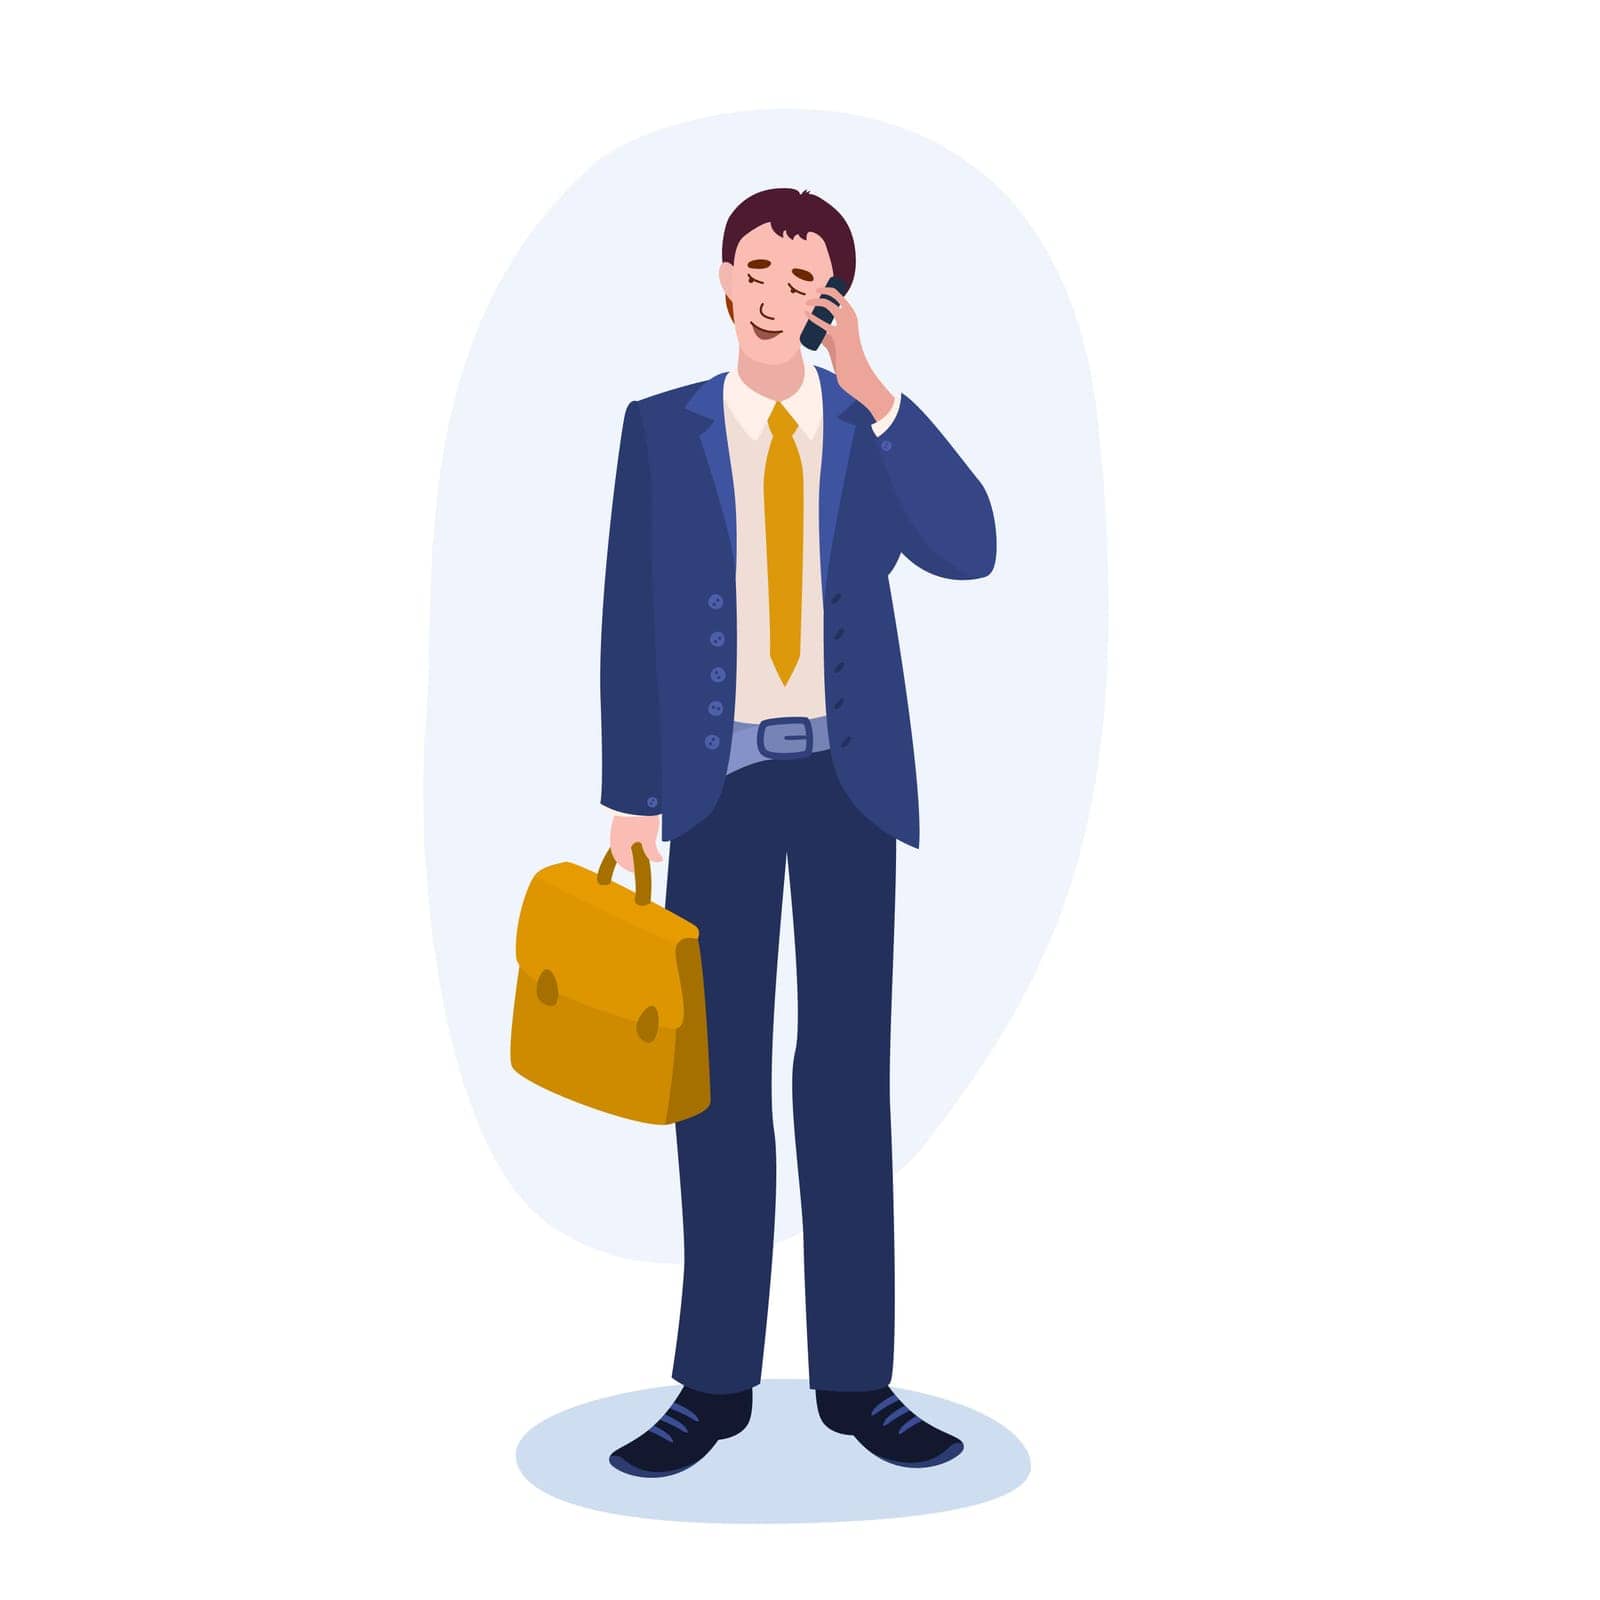 Man With Briefcase Talking Phone illustration. Man, suit, tie, smartphone. Creative editable vector graphic design.